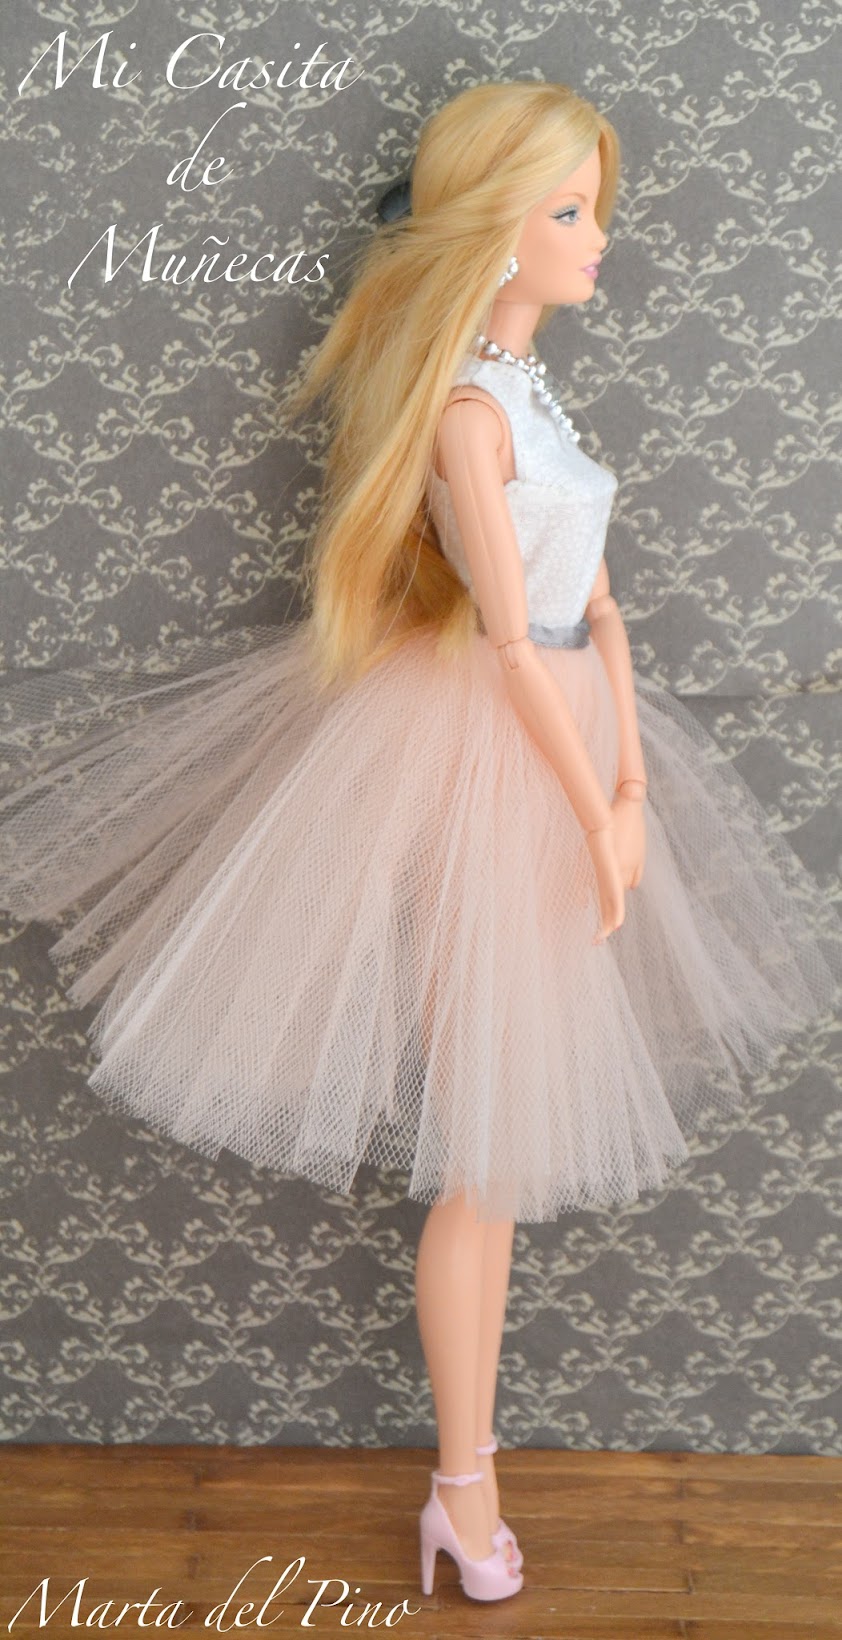 Barbie 2007 Robert Best, new year, año nuevo, sculpt face barbie lara, molde lara, mi casita de muñecas, Marta del Pino